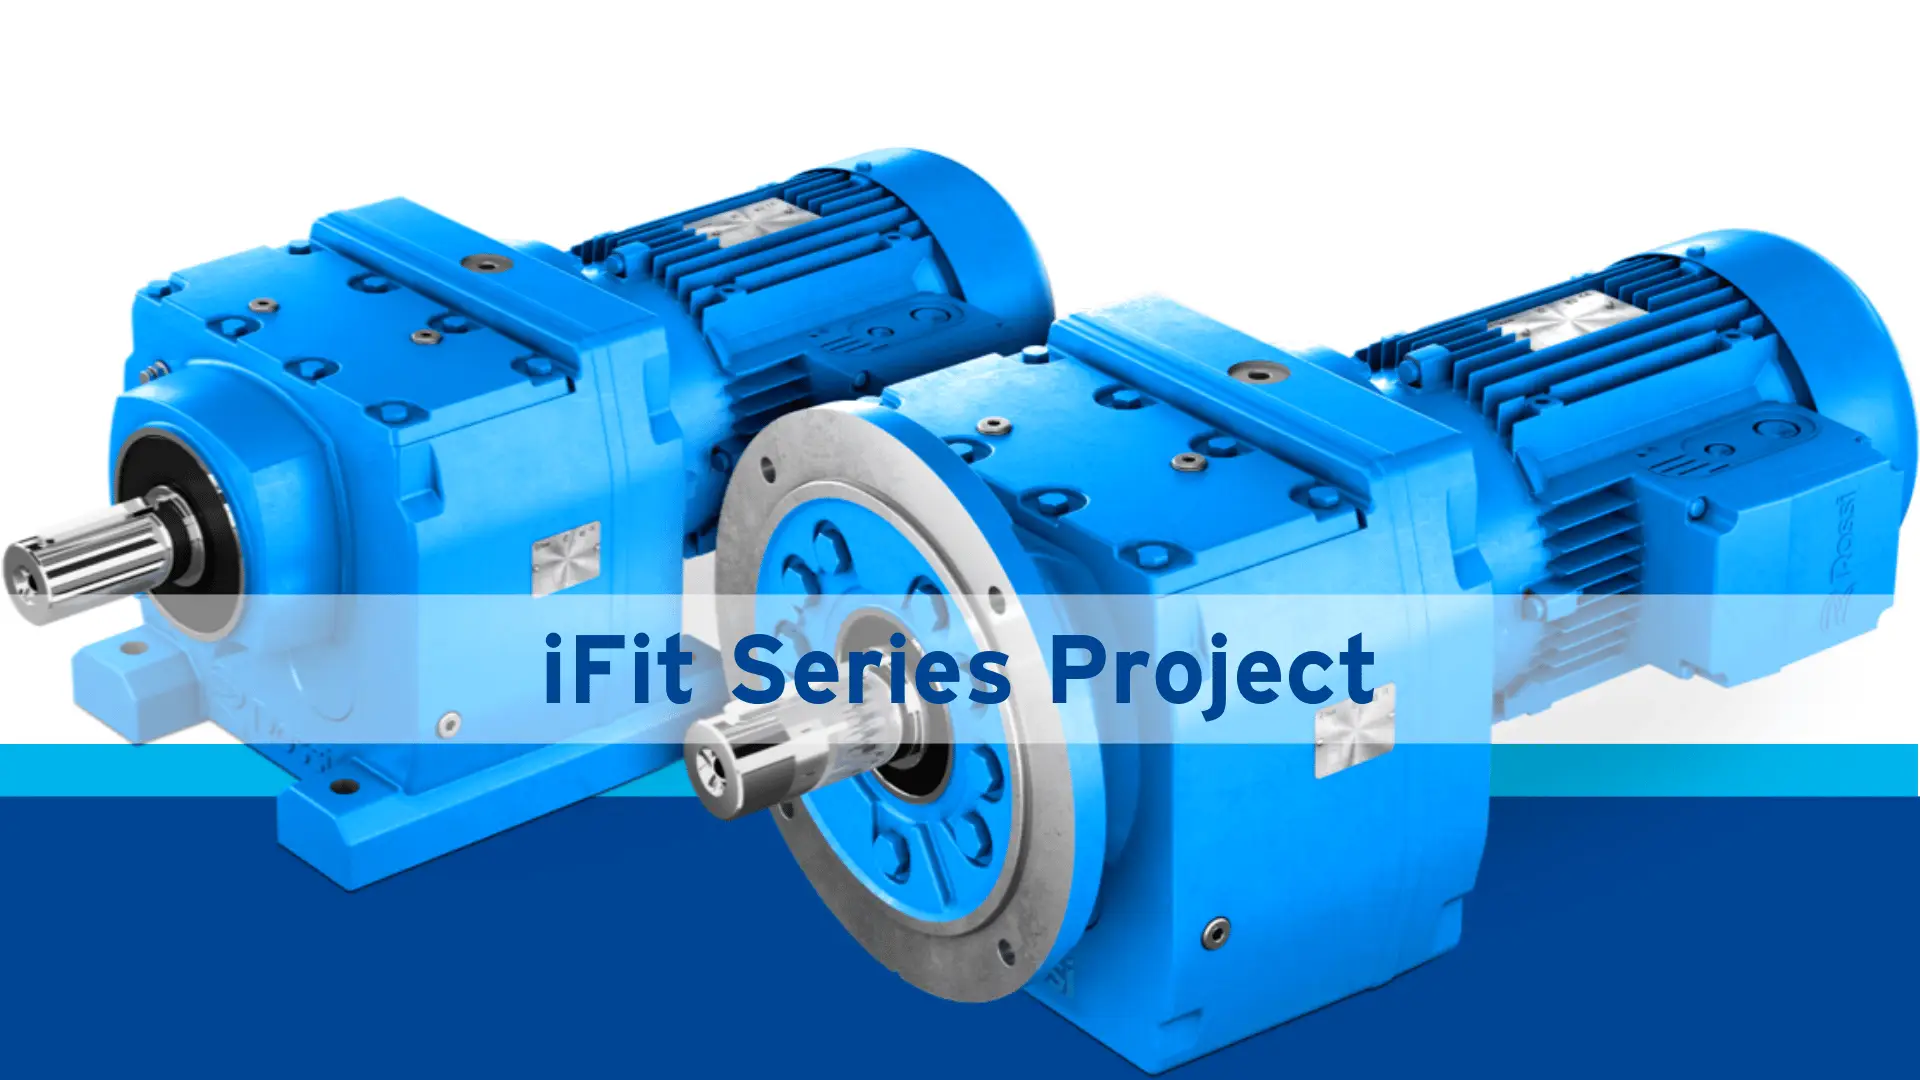 iFit series